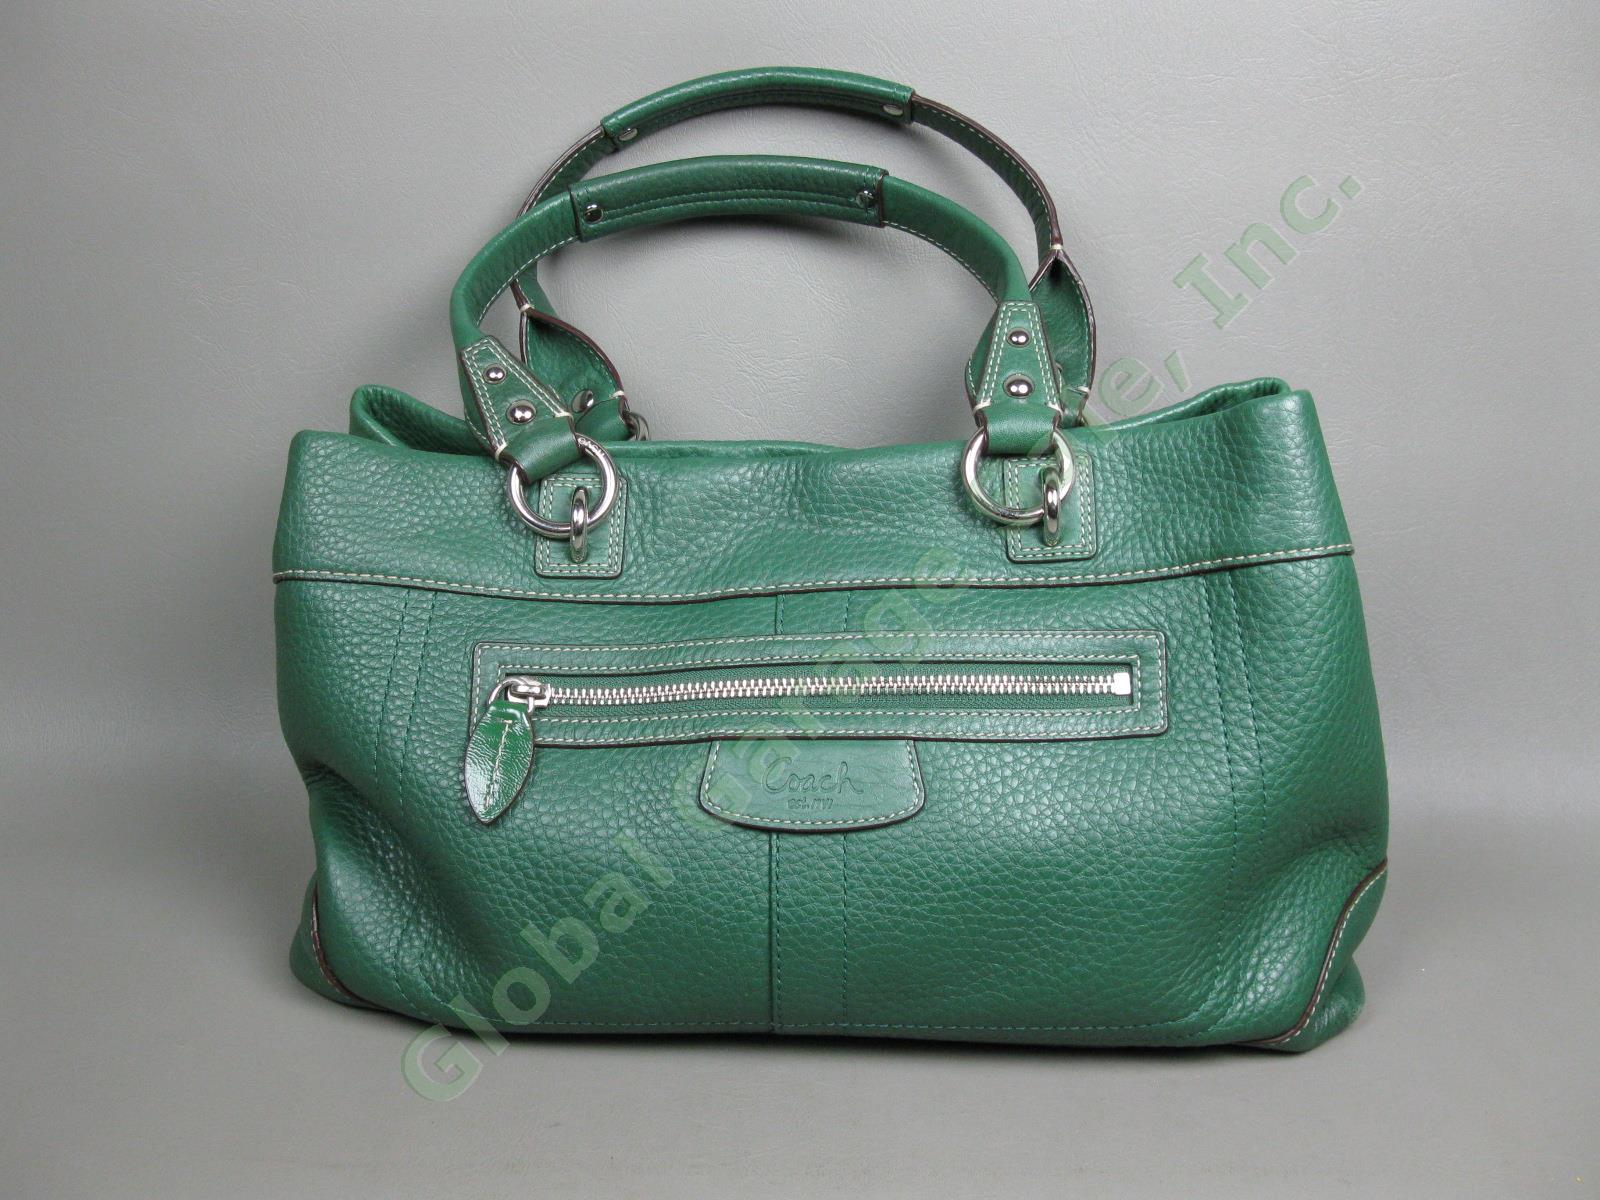 BRAND NEW Coach Designer Dark Green Pebble Leather Handbag Satchel Tote Bag NR 1